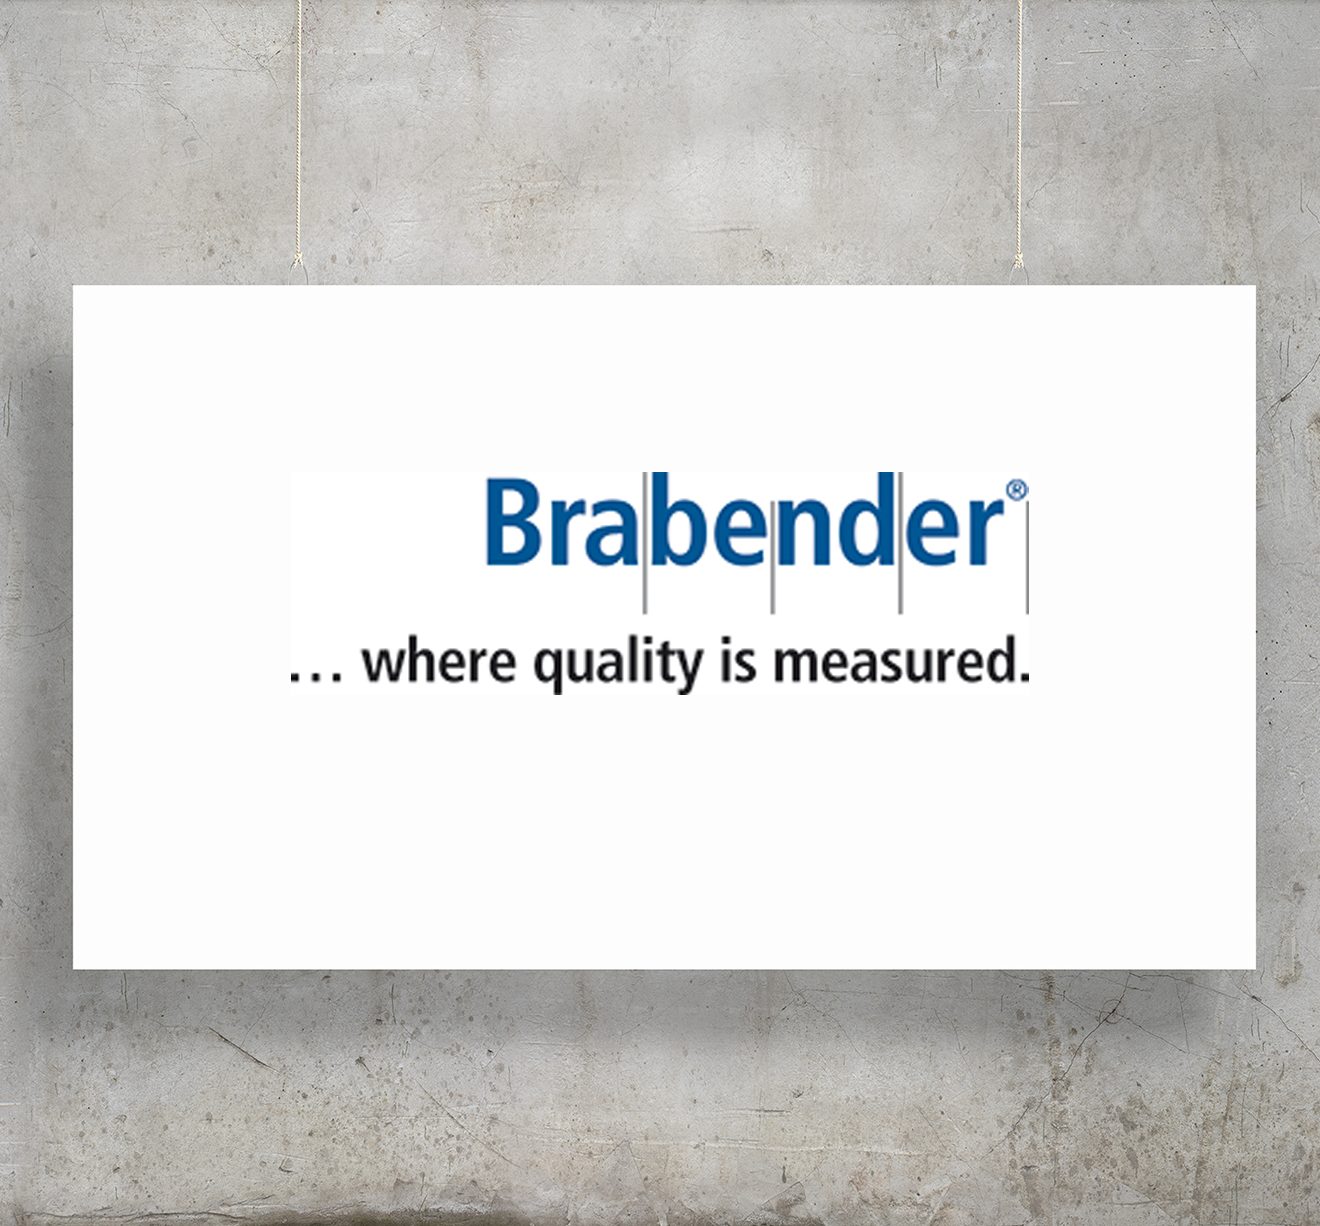 Brabender Company Profile